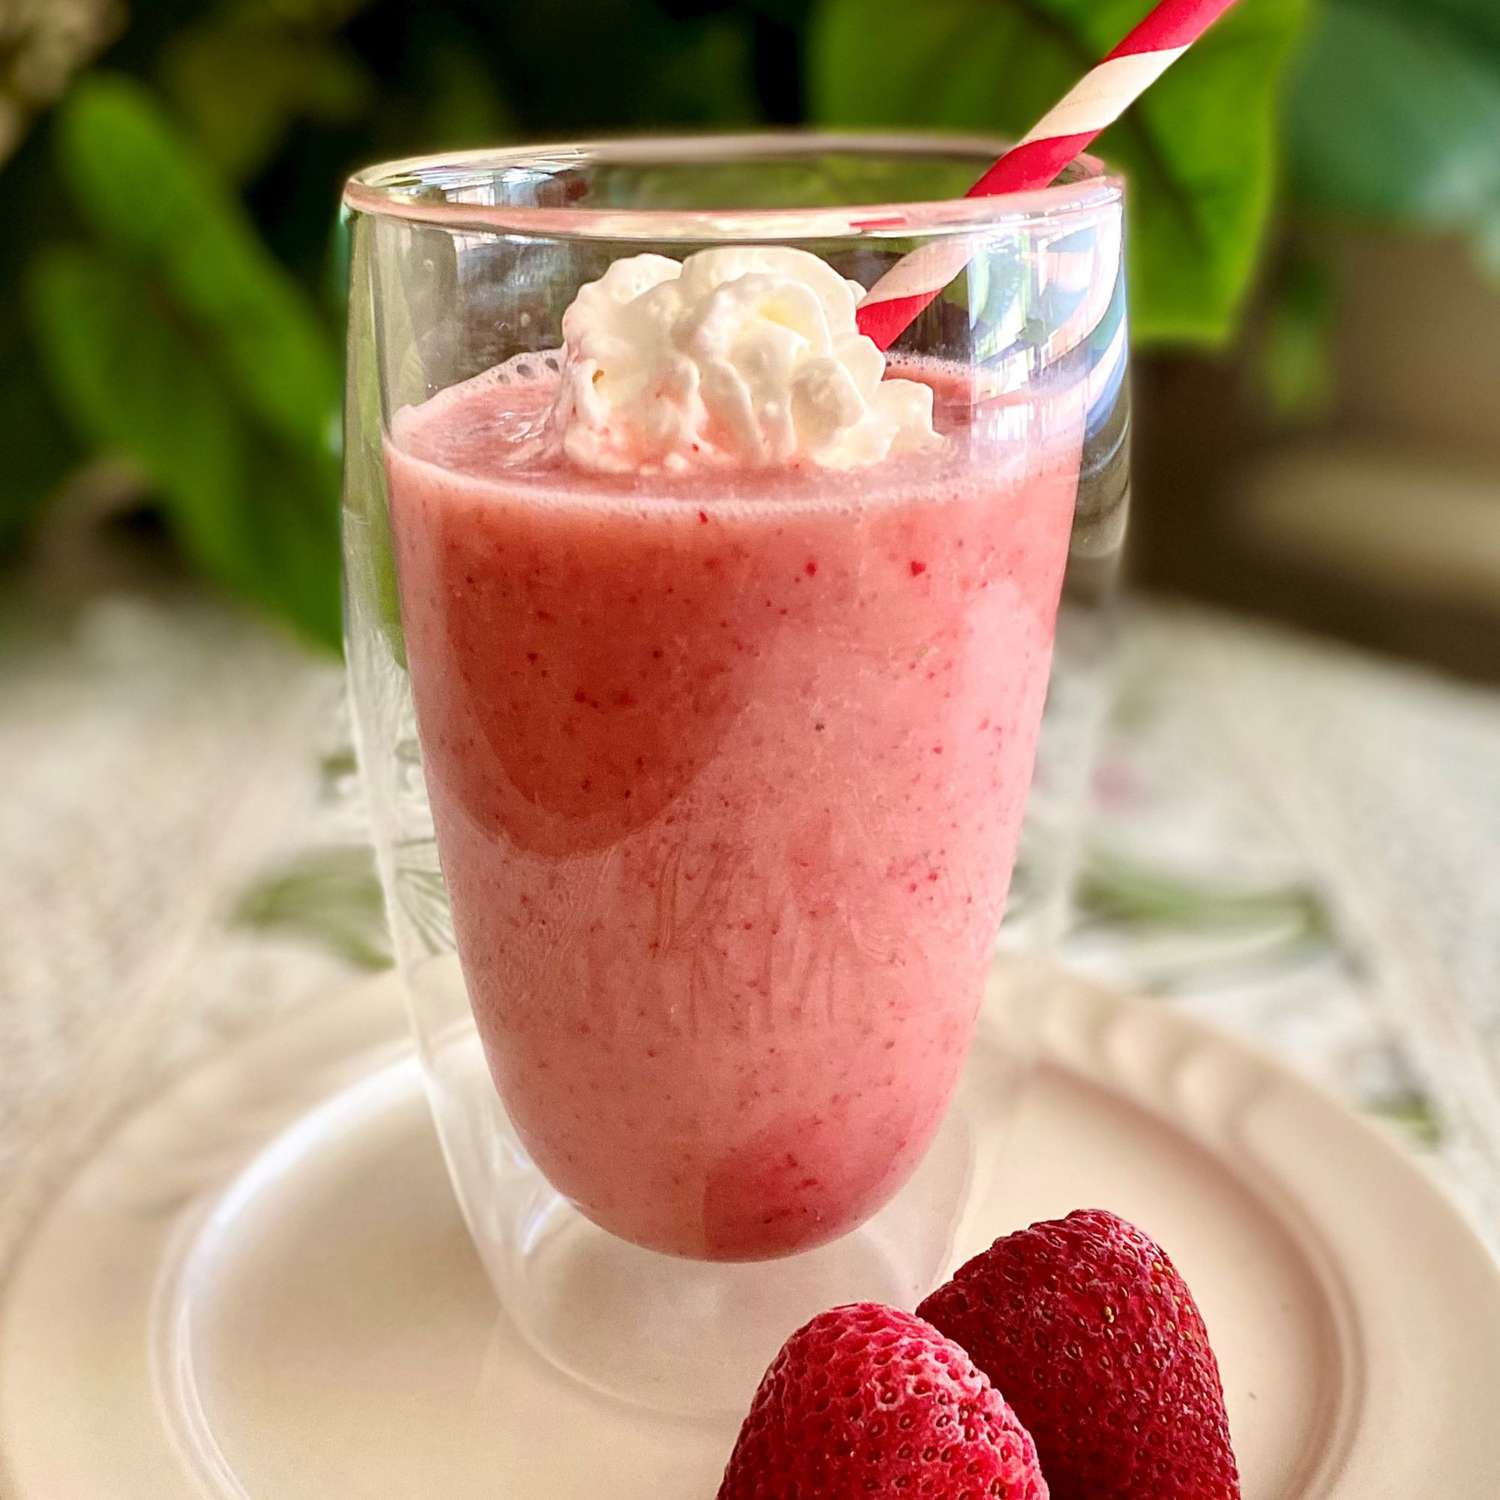 strawberry shake in glass with straw